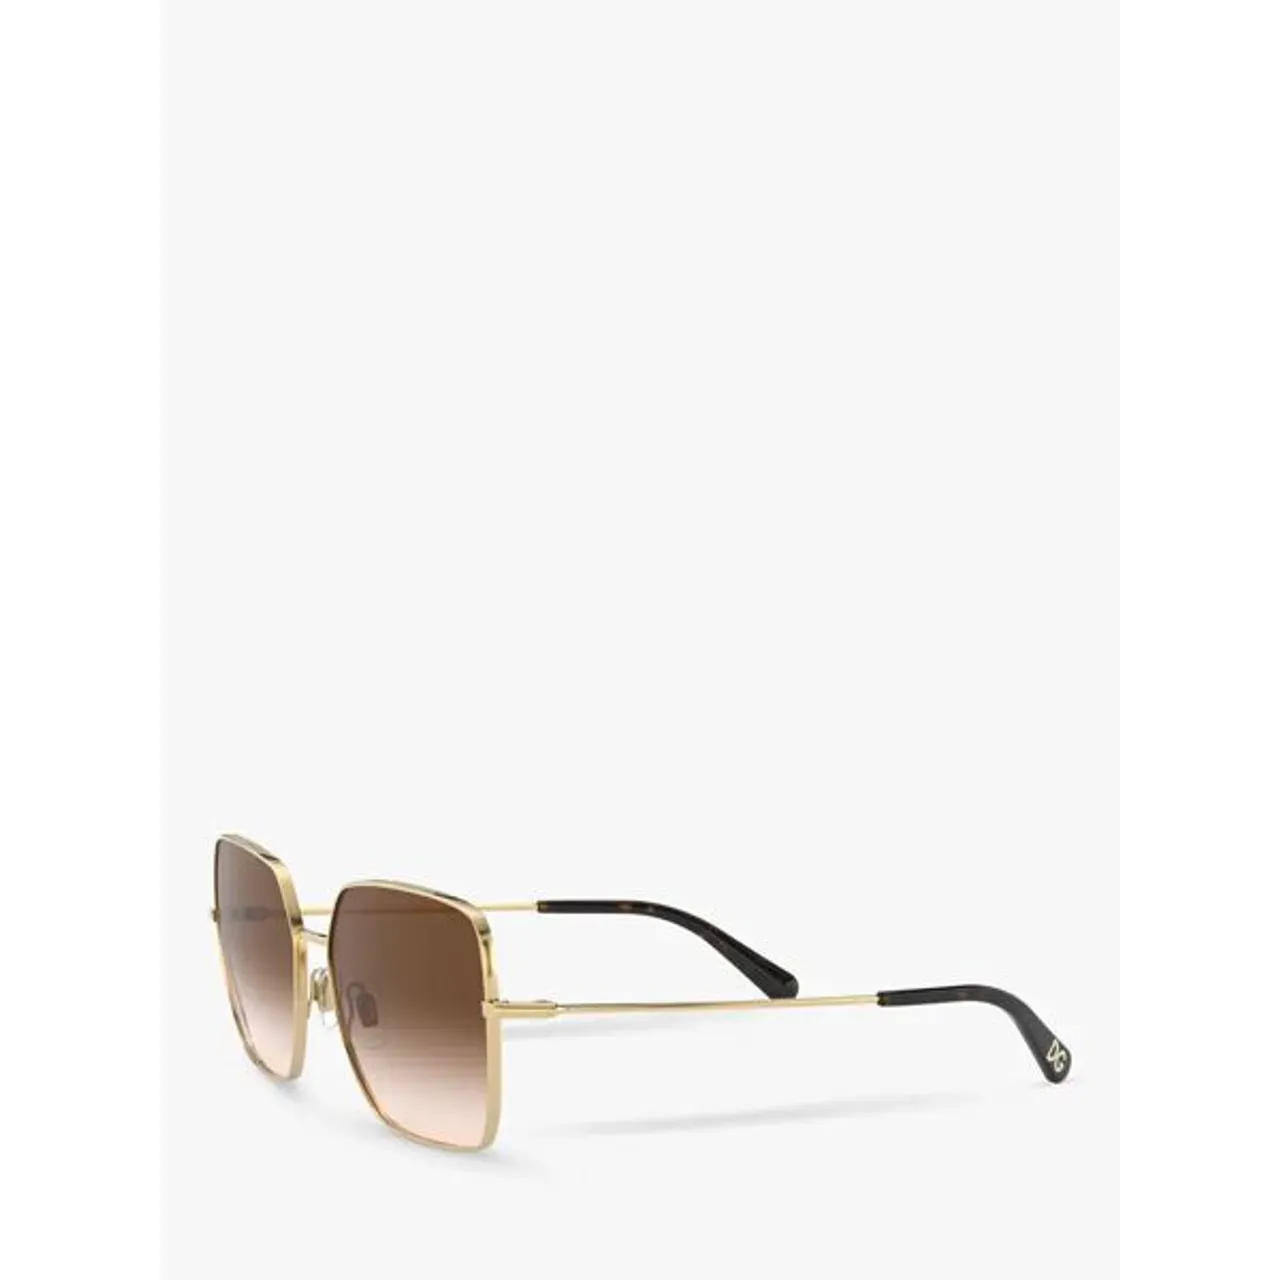 Dolce & Gabbana DG2242 Women's Square Sunglasses - Gold/Brown Gradient - Female